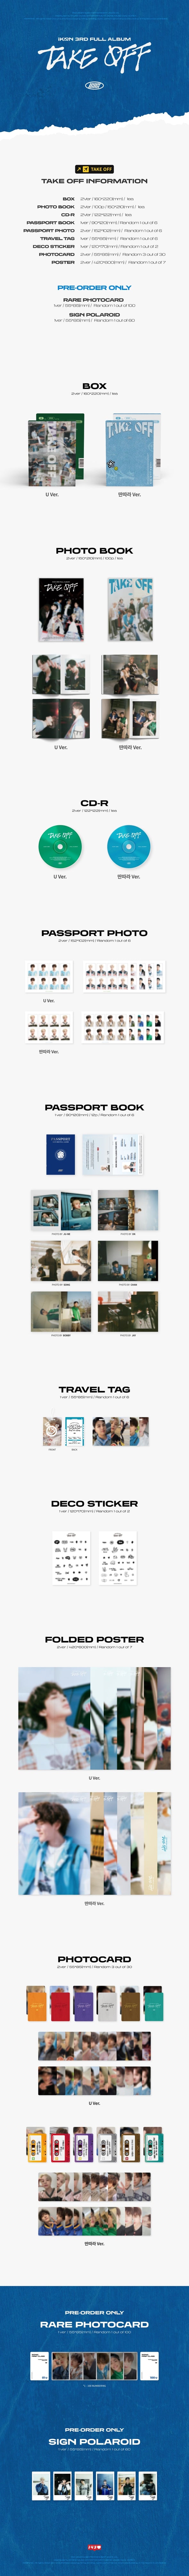 iKON - Full Album Vol.3 - [TAKE OFF] - Kpop Music 사랑해요